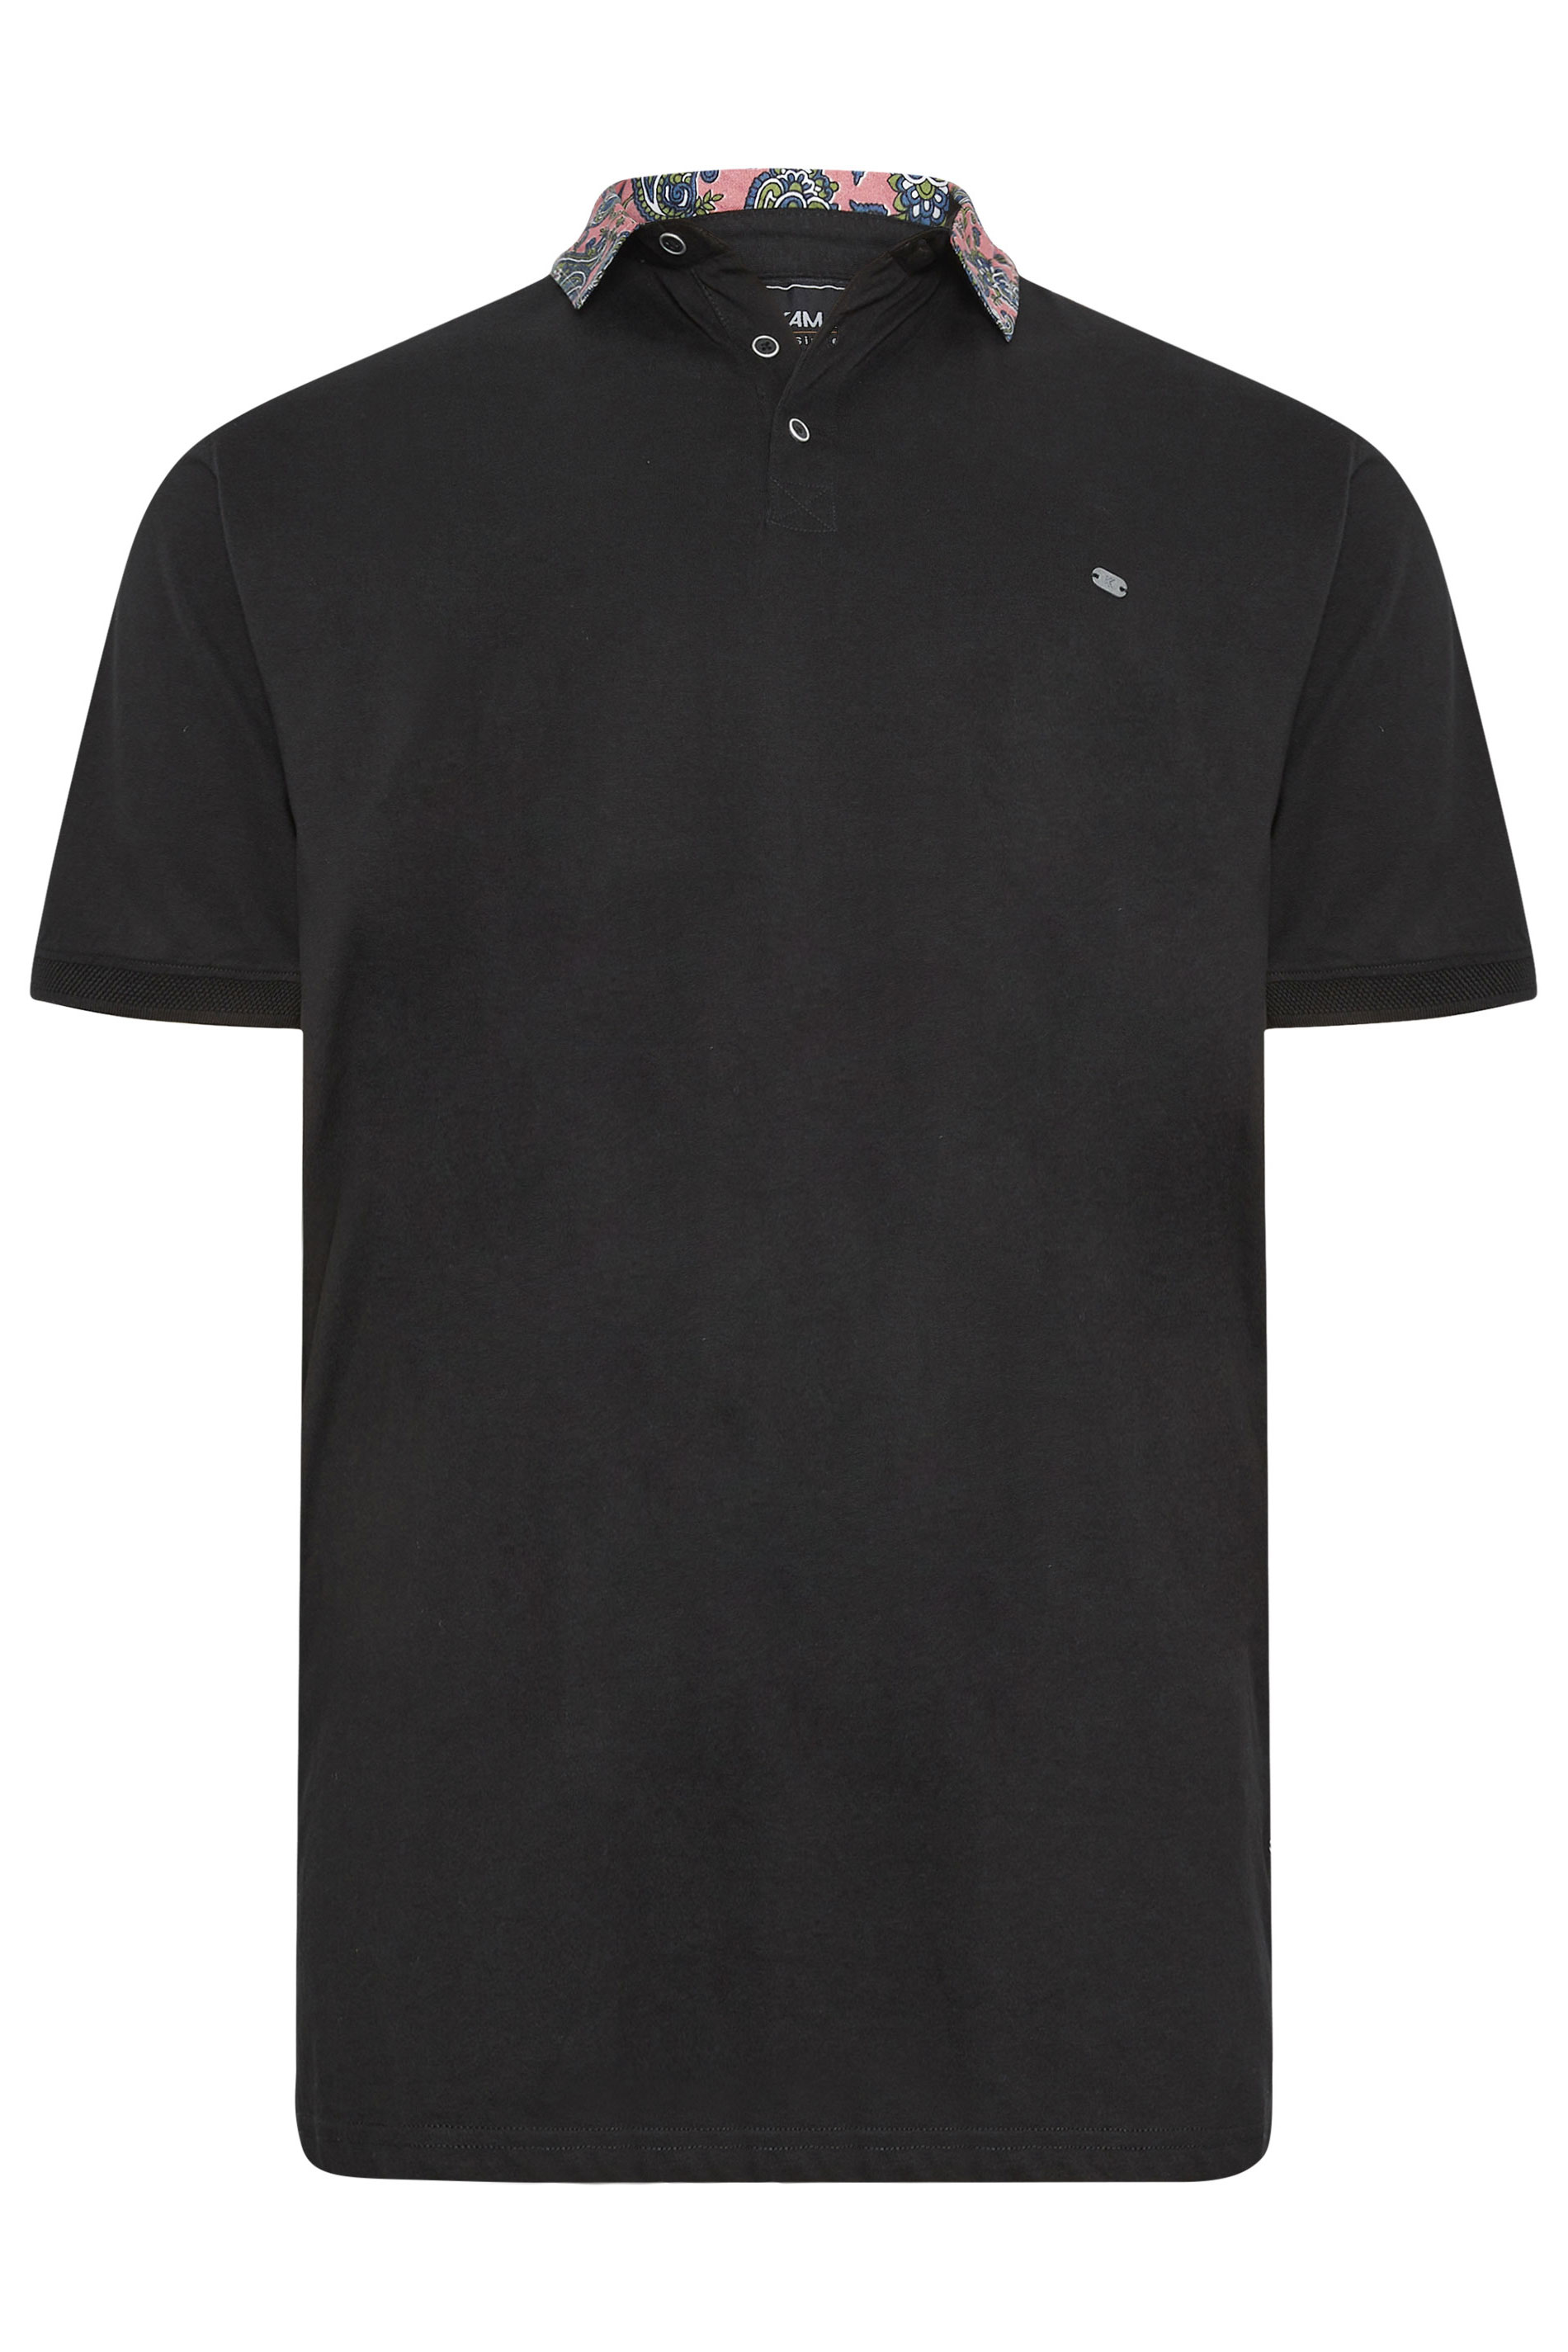 KAM Big & Tall Black Jersey Floral Collar Polo Shirt | BadRhino 1